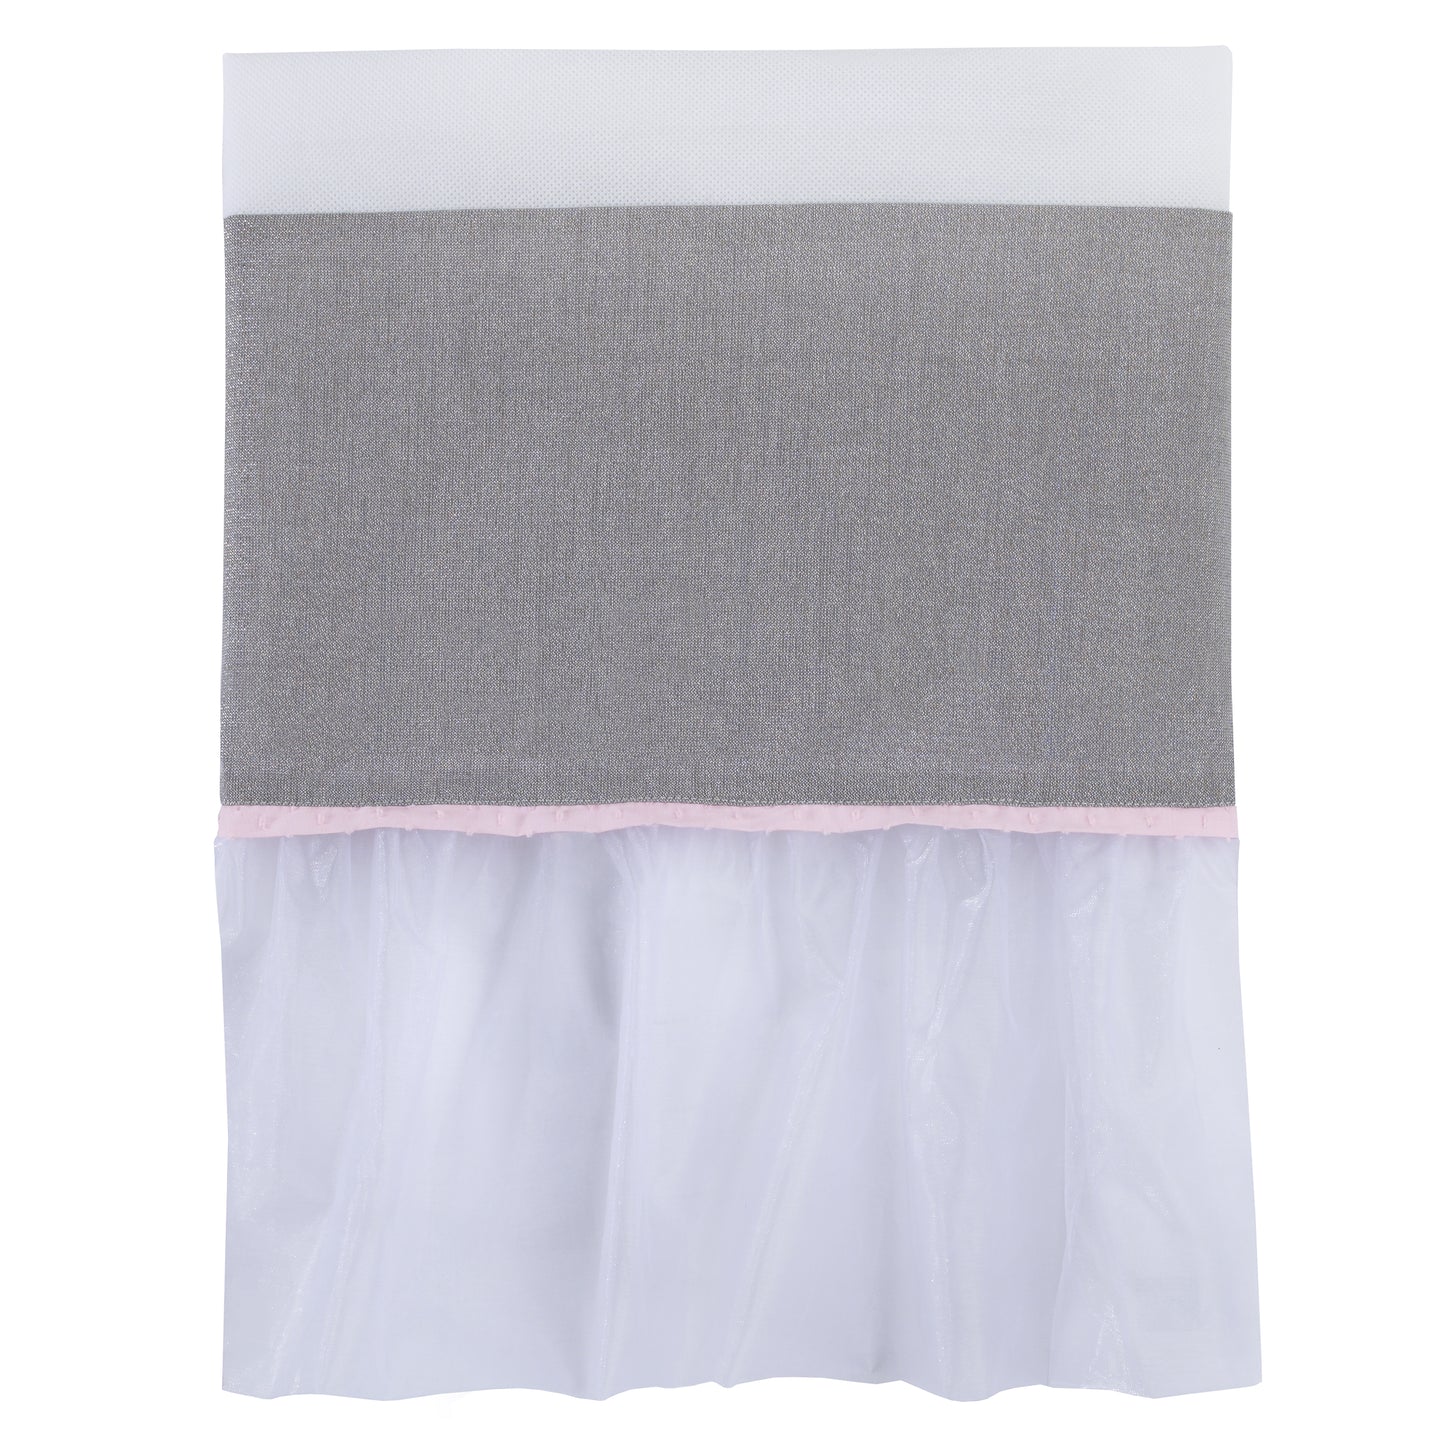 NoJo Ballerina Bows Pink, Sparkle Grey Metallic, and White 4 Piece Nursery Crib Bedding Set - Comforter, 100% Cotton Fitted Crib Sheet, Dust Ruffle, Storage